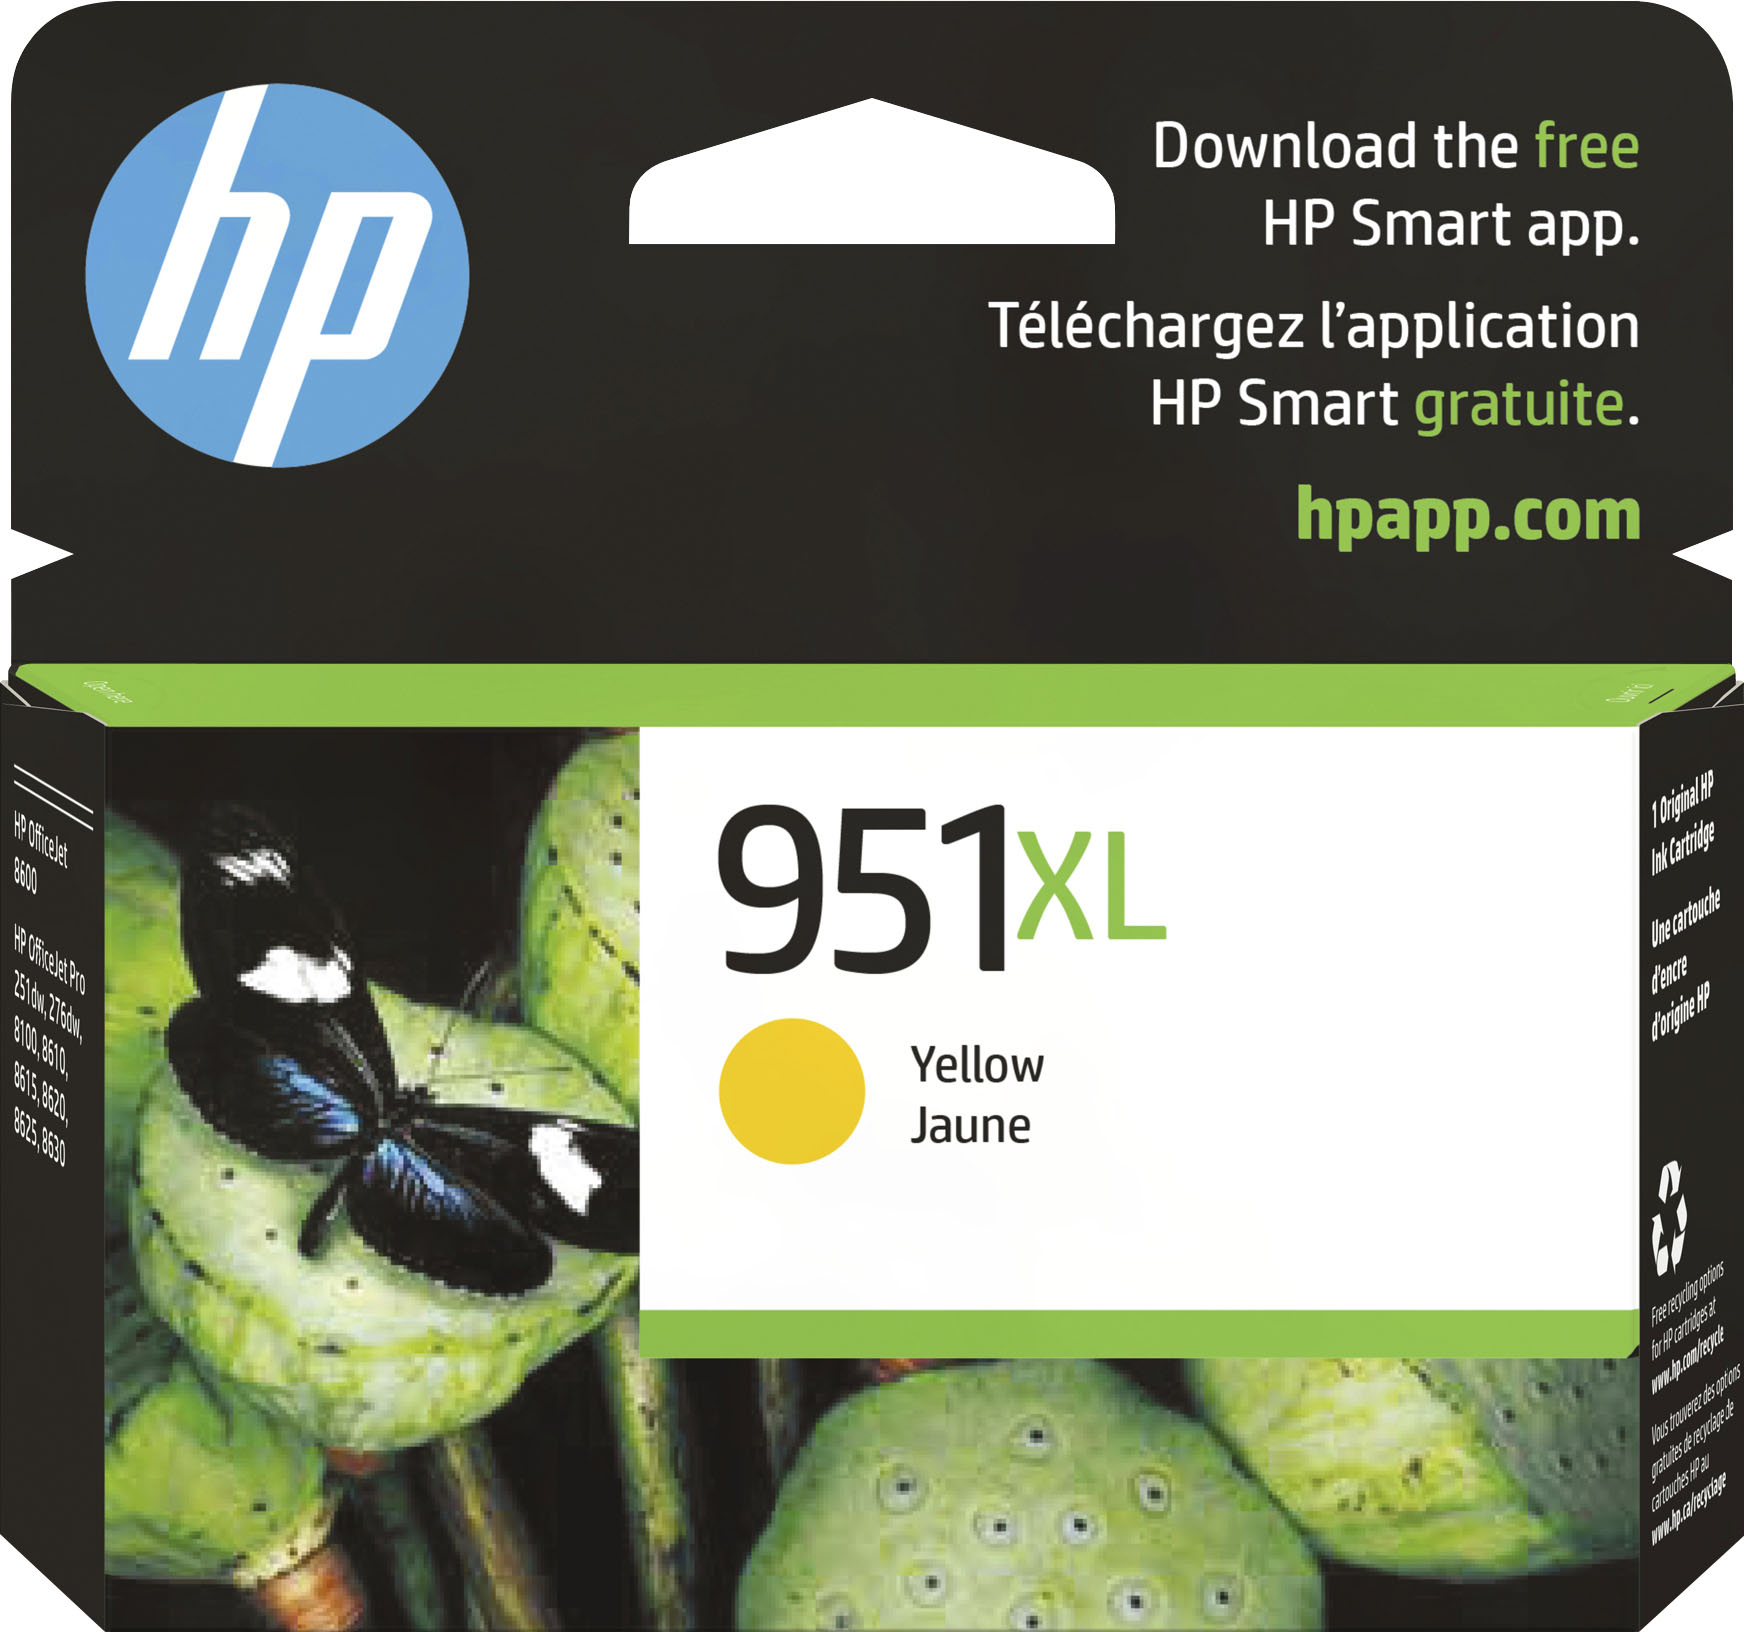 HP 912XL Inkjet Cartridge Yellow - Jarir Bookstore KSA